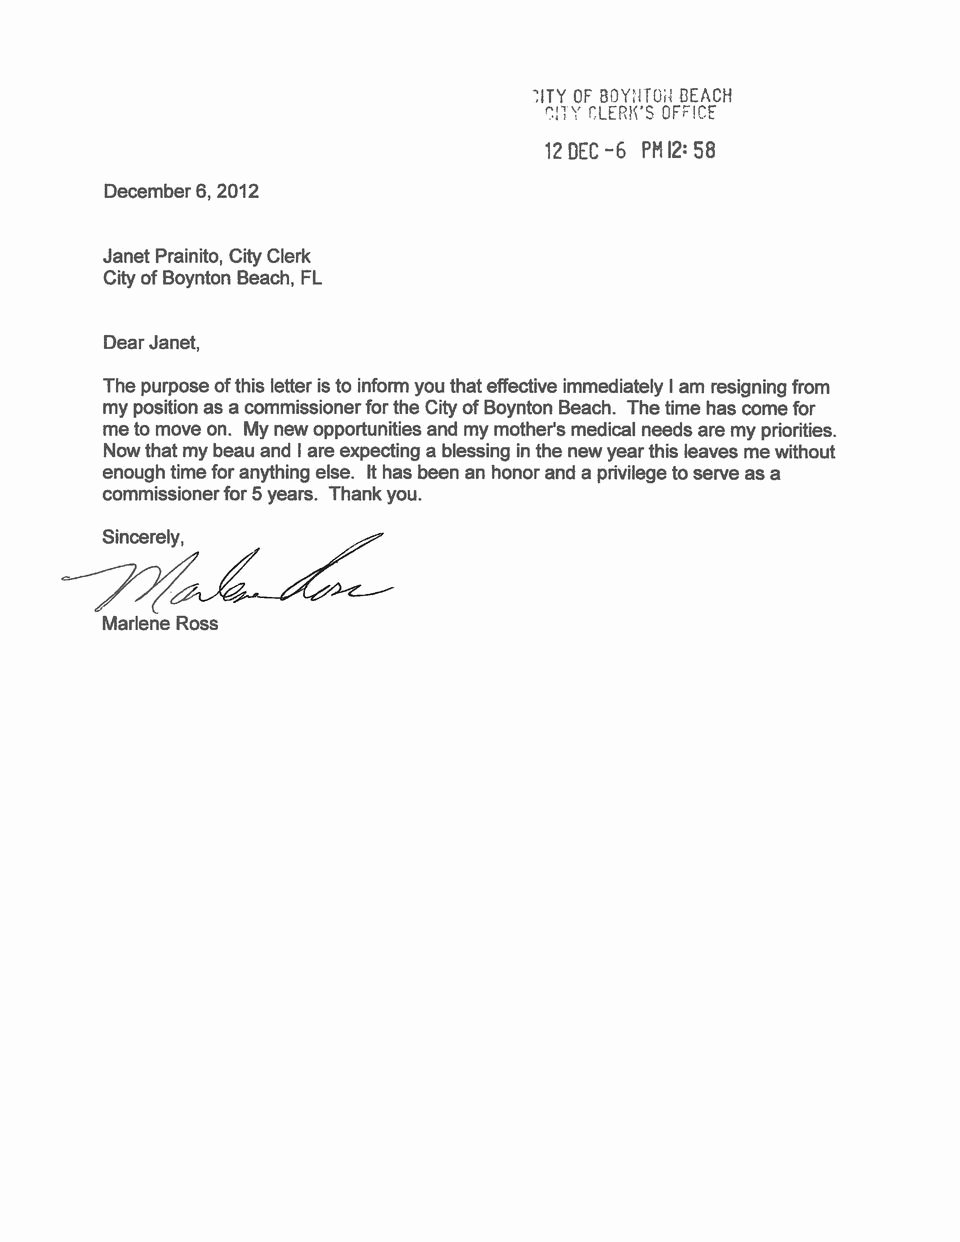 Corporate Officer Resignation Letter New Resignation Letter Best Resignation Letter Ever the Chief